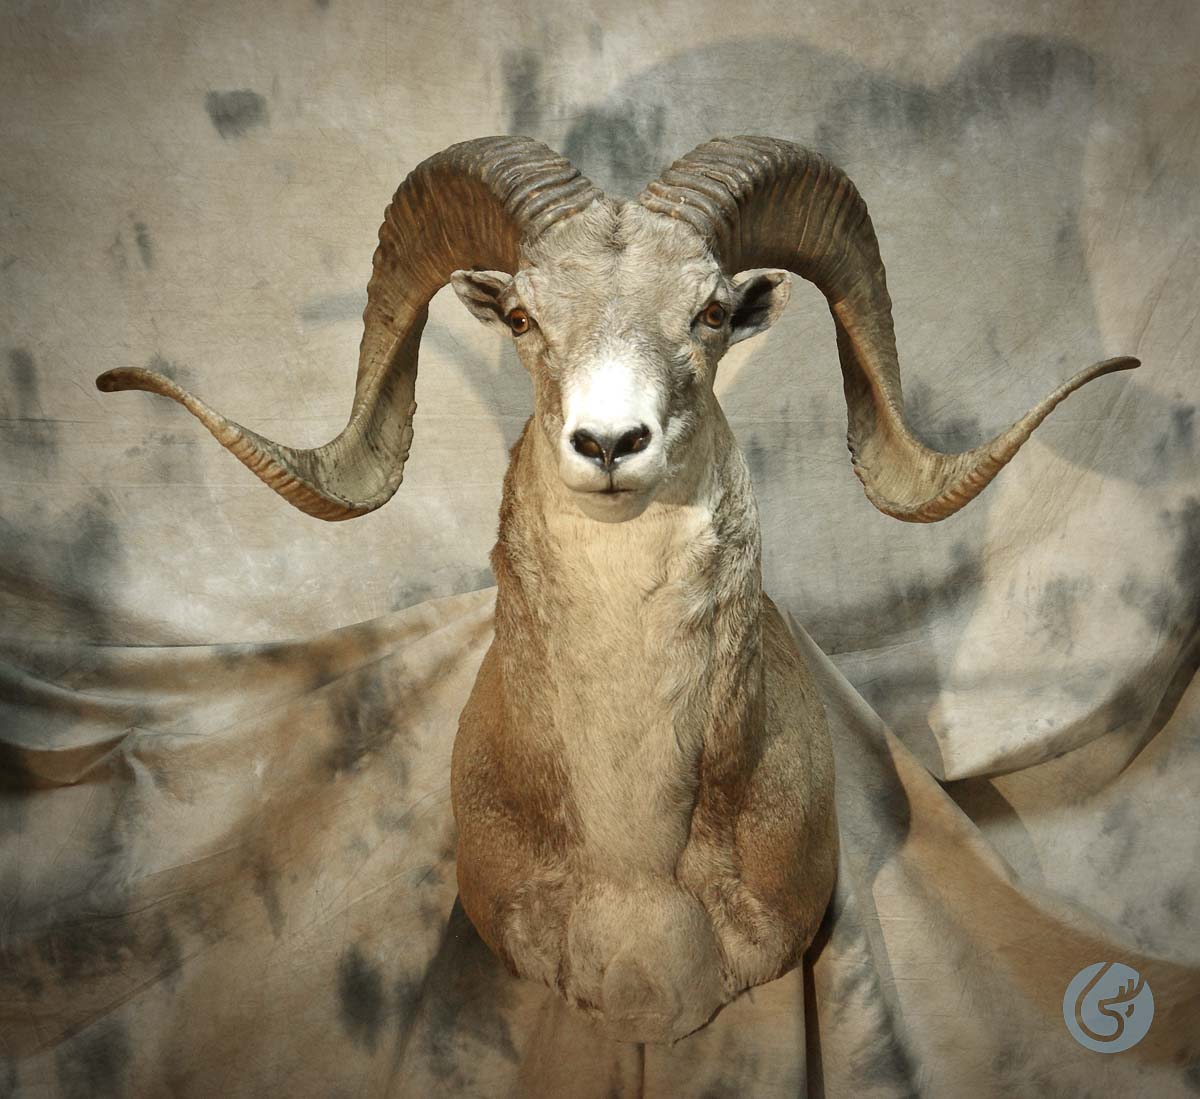 Ovce středoasijská Marco Polo (Marco Polo sheep)